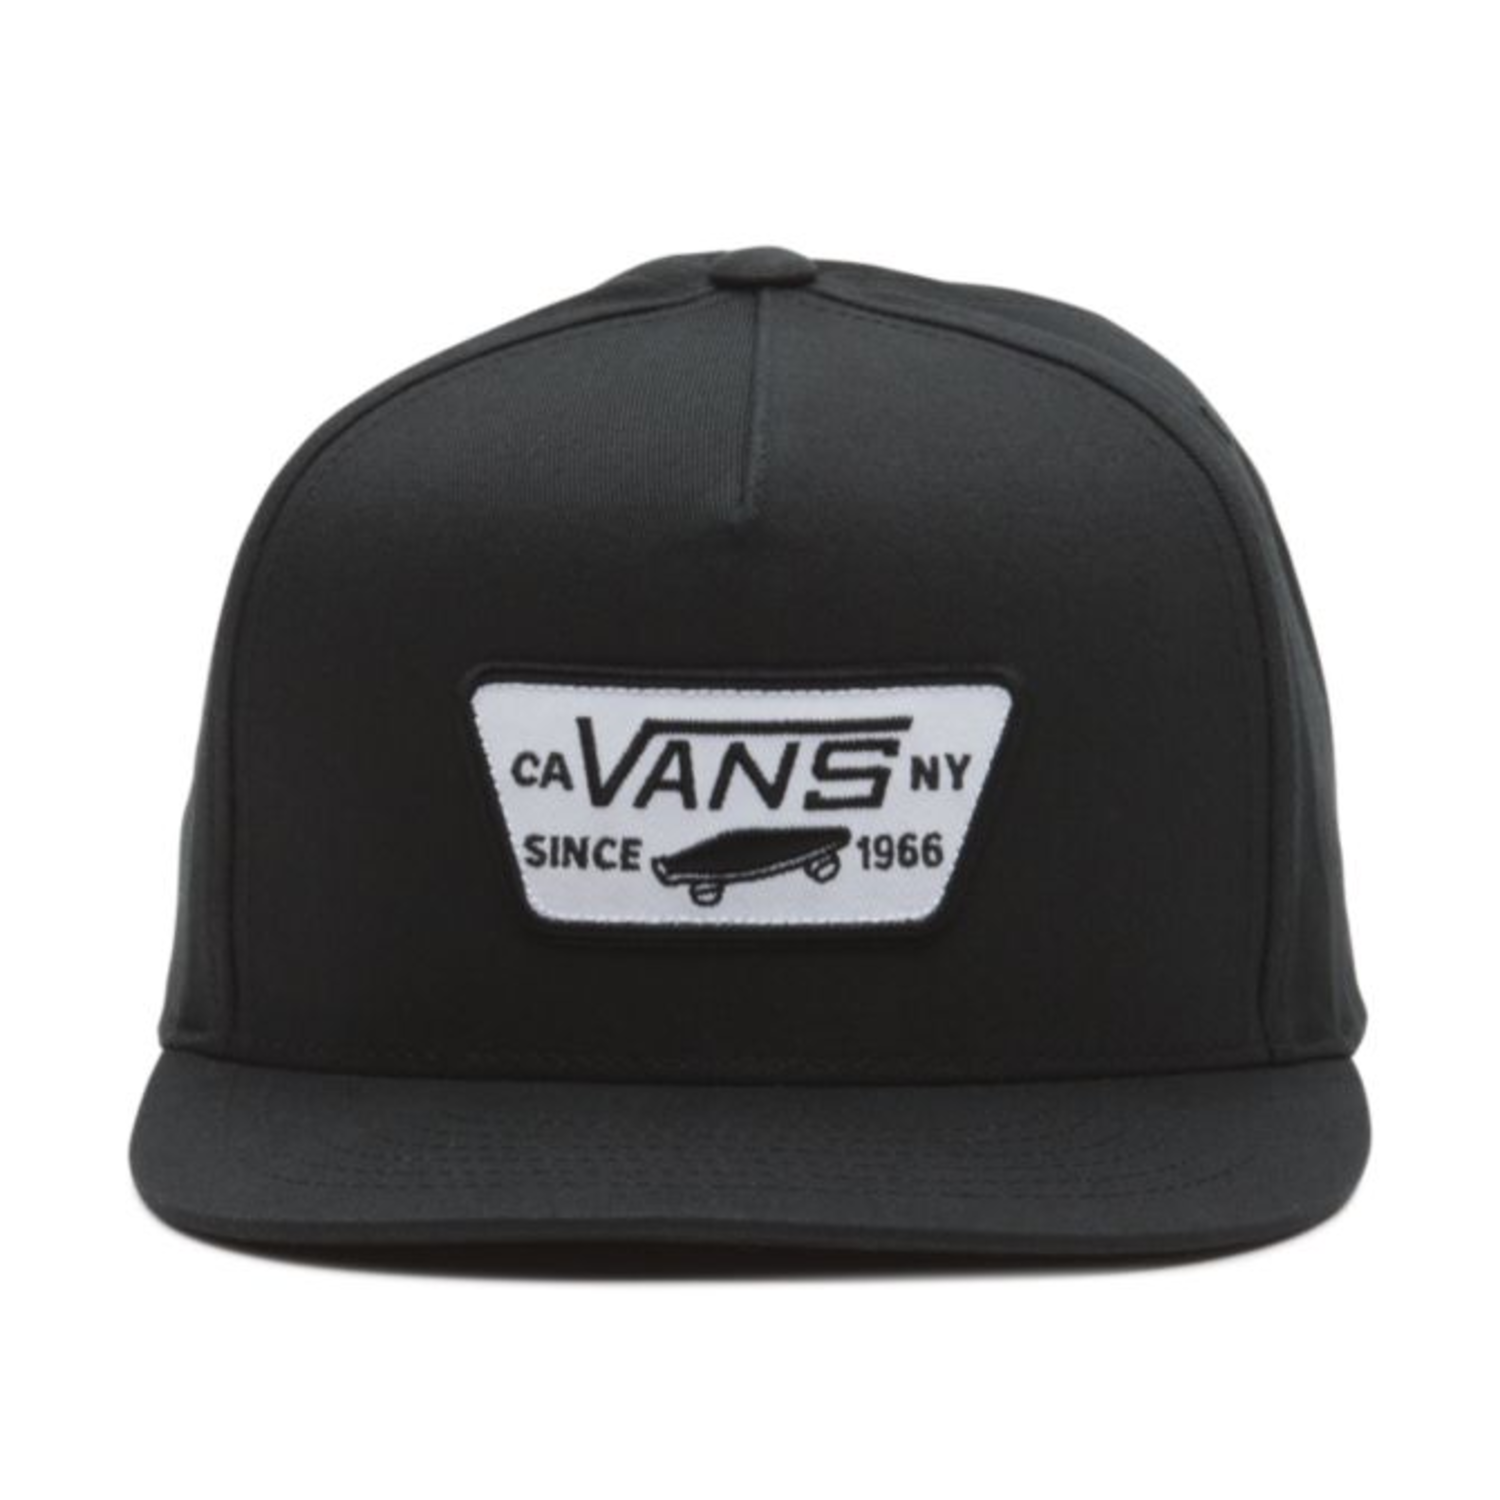 vans hats cheap Online Shopping for 